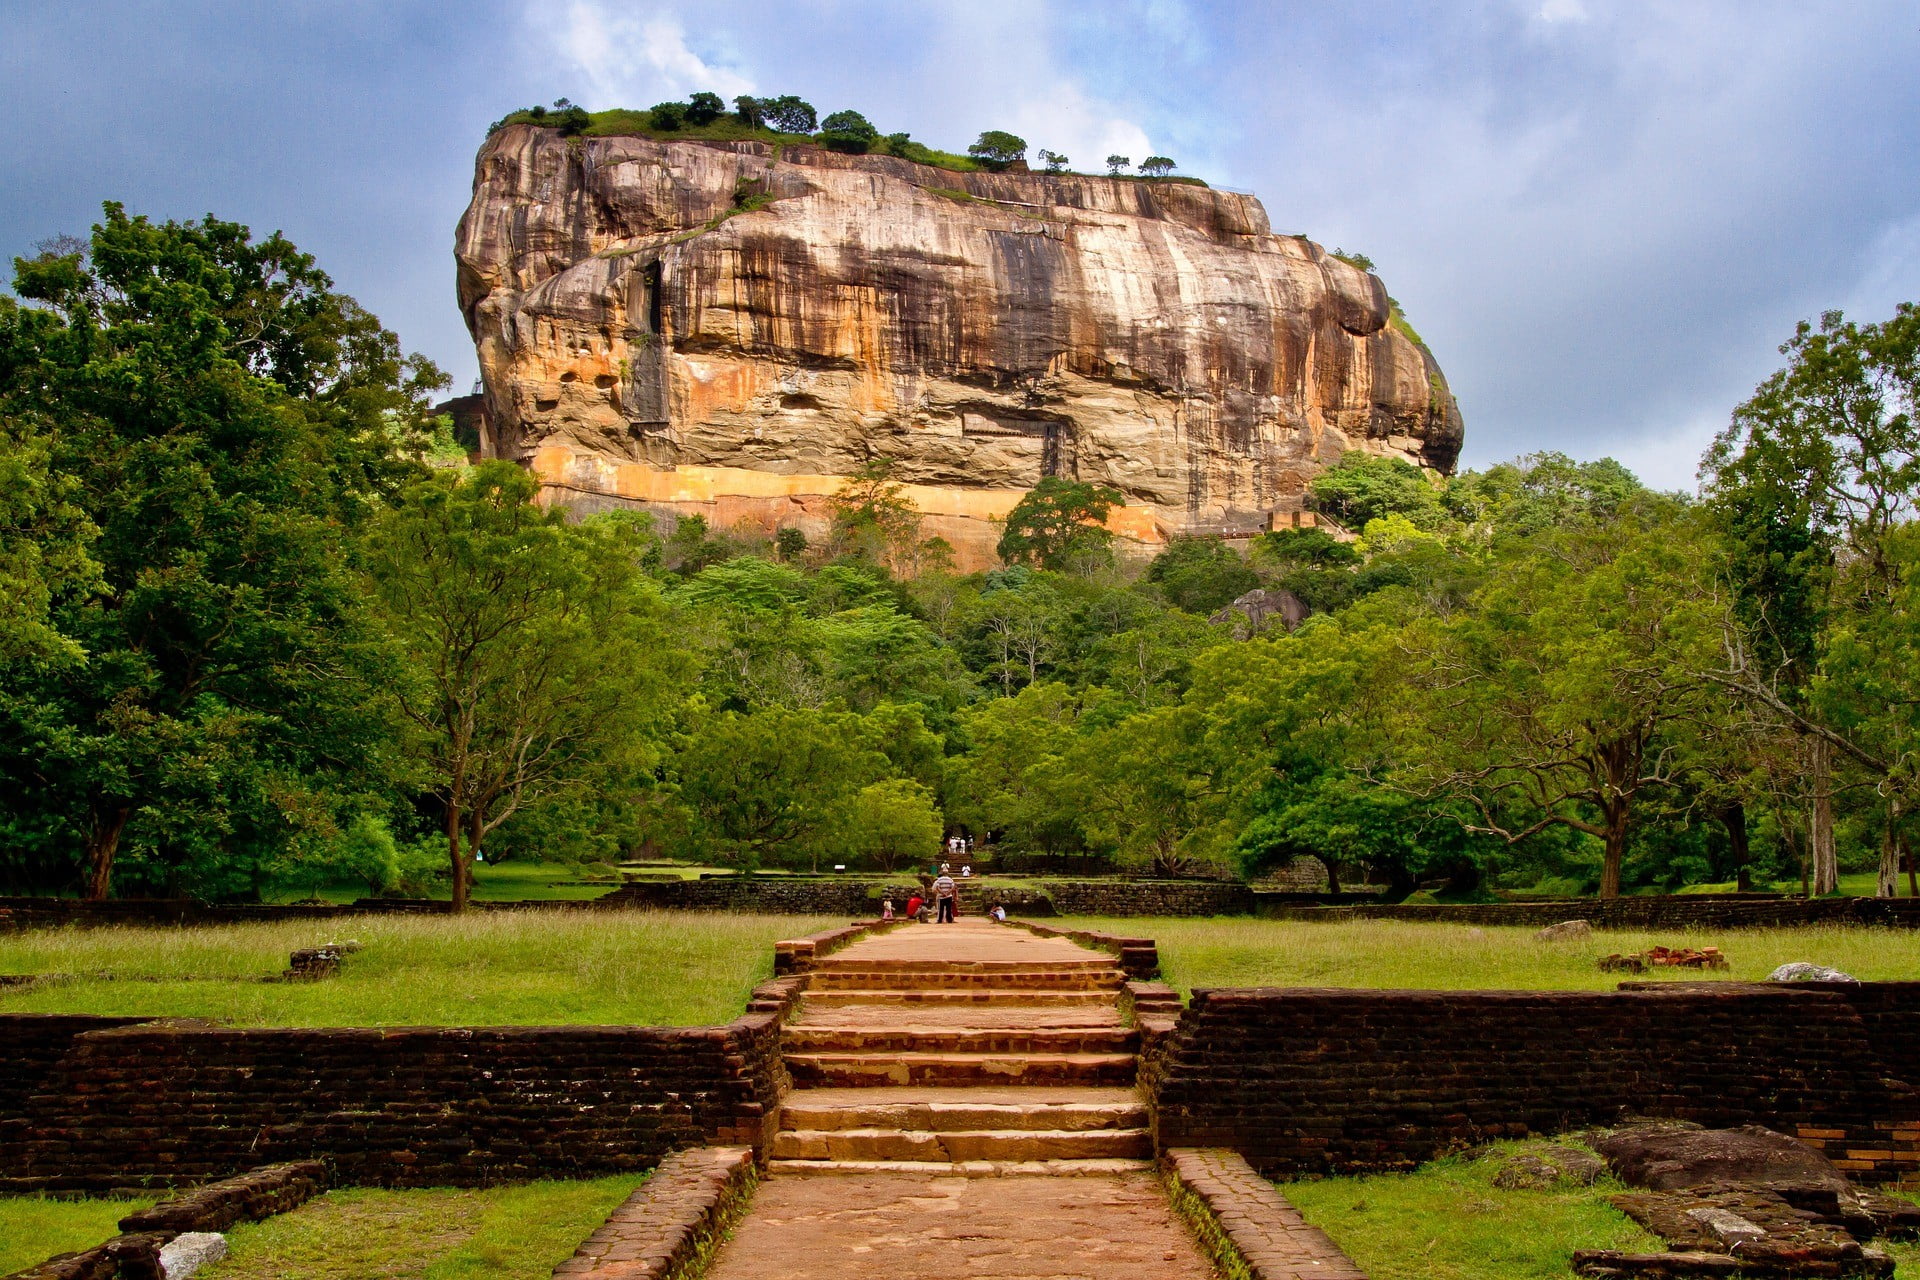 The Wild Heart of Yala National Park – Sri Lanka's most diverse park awaits